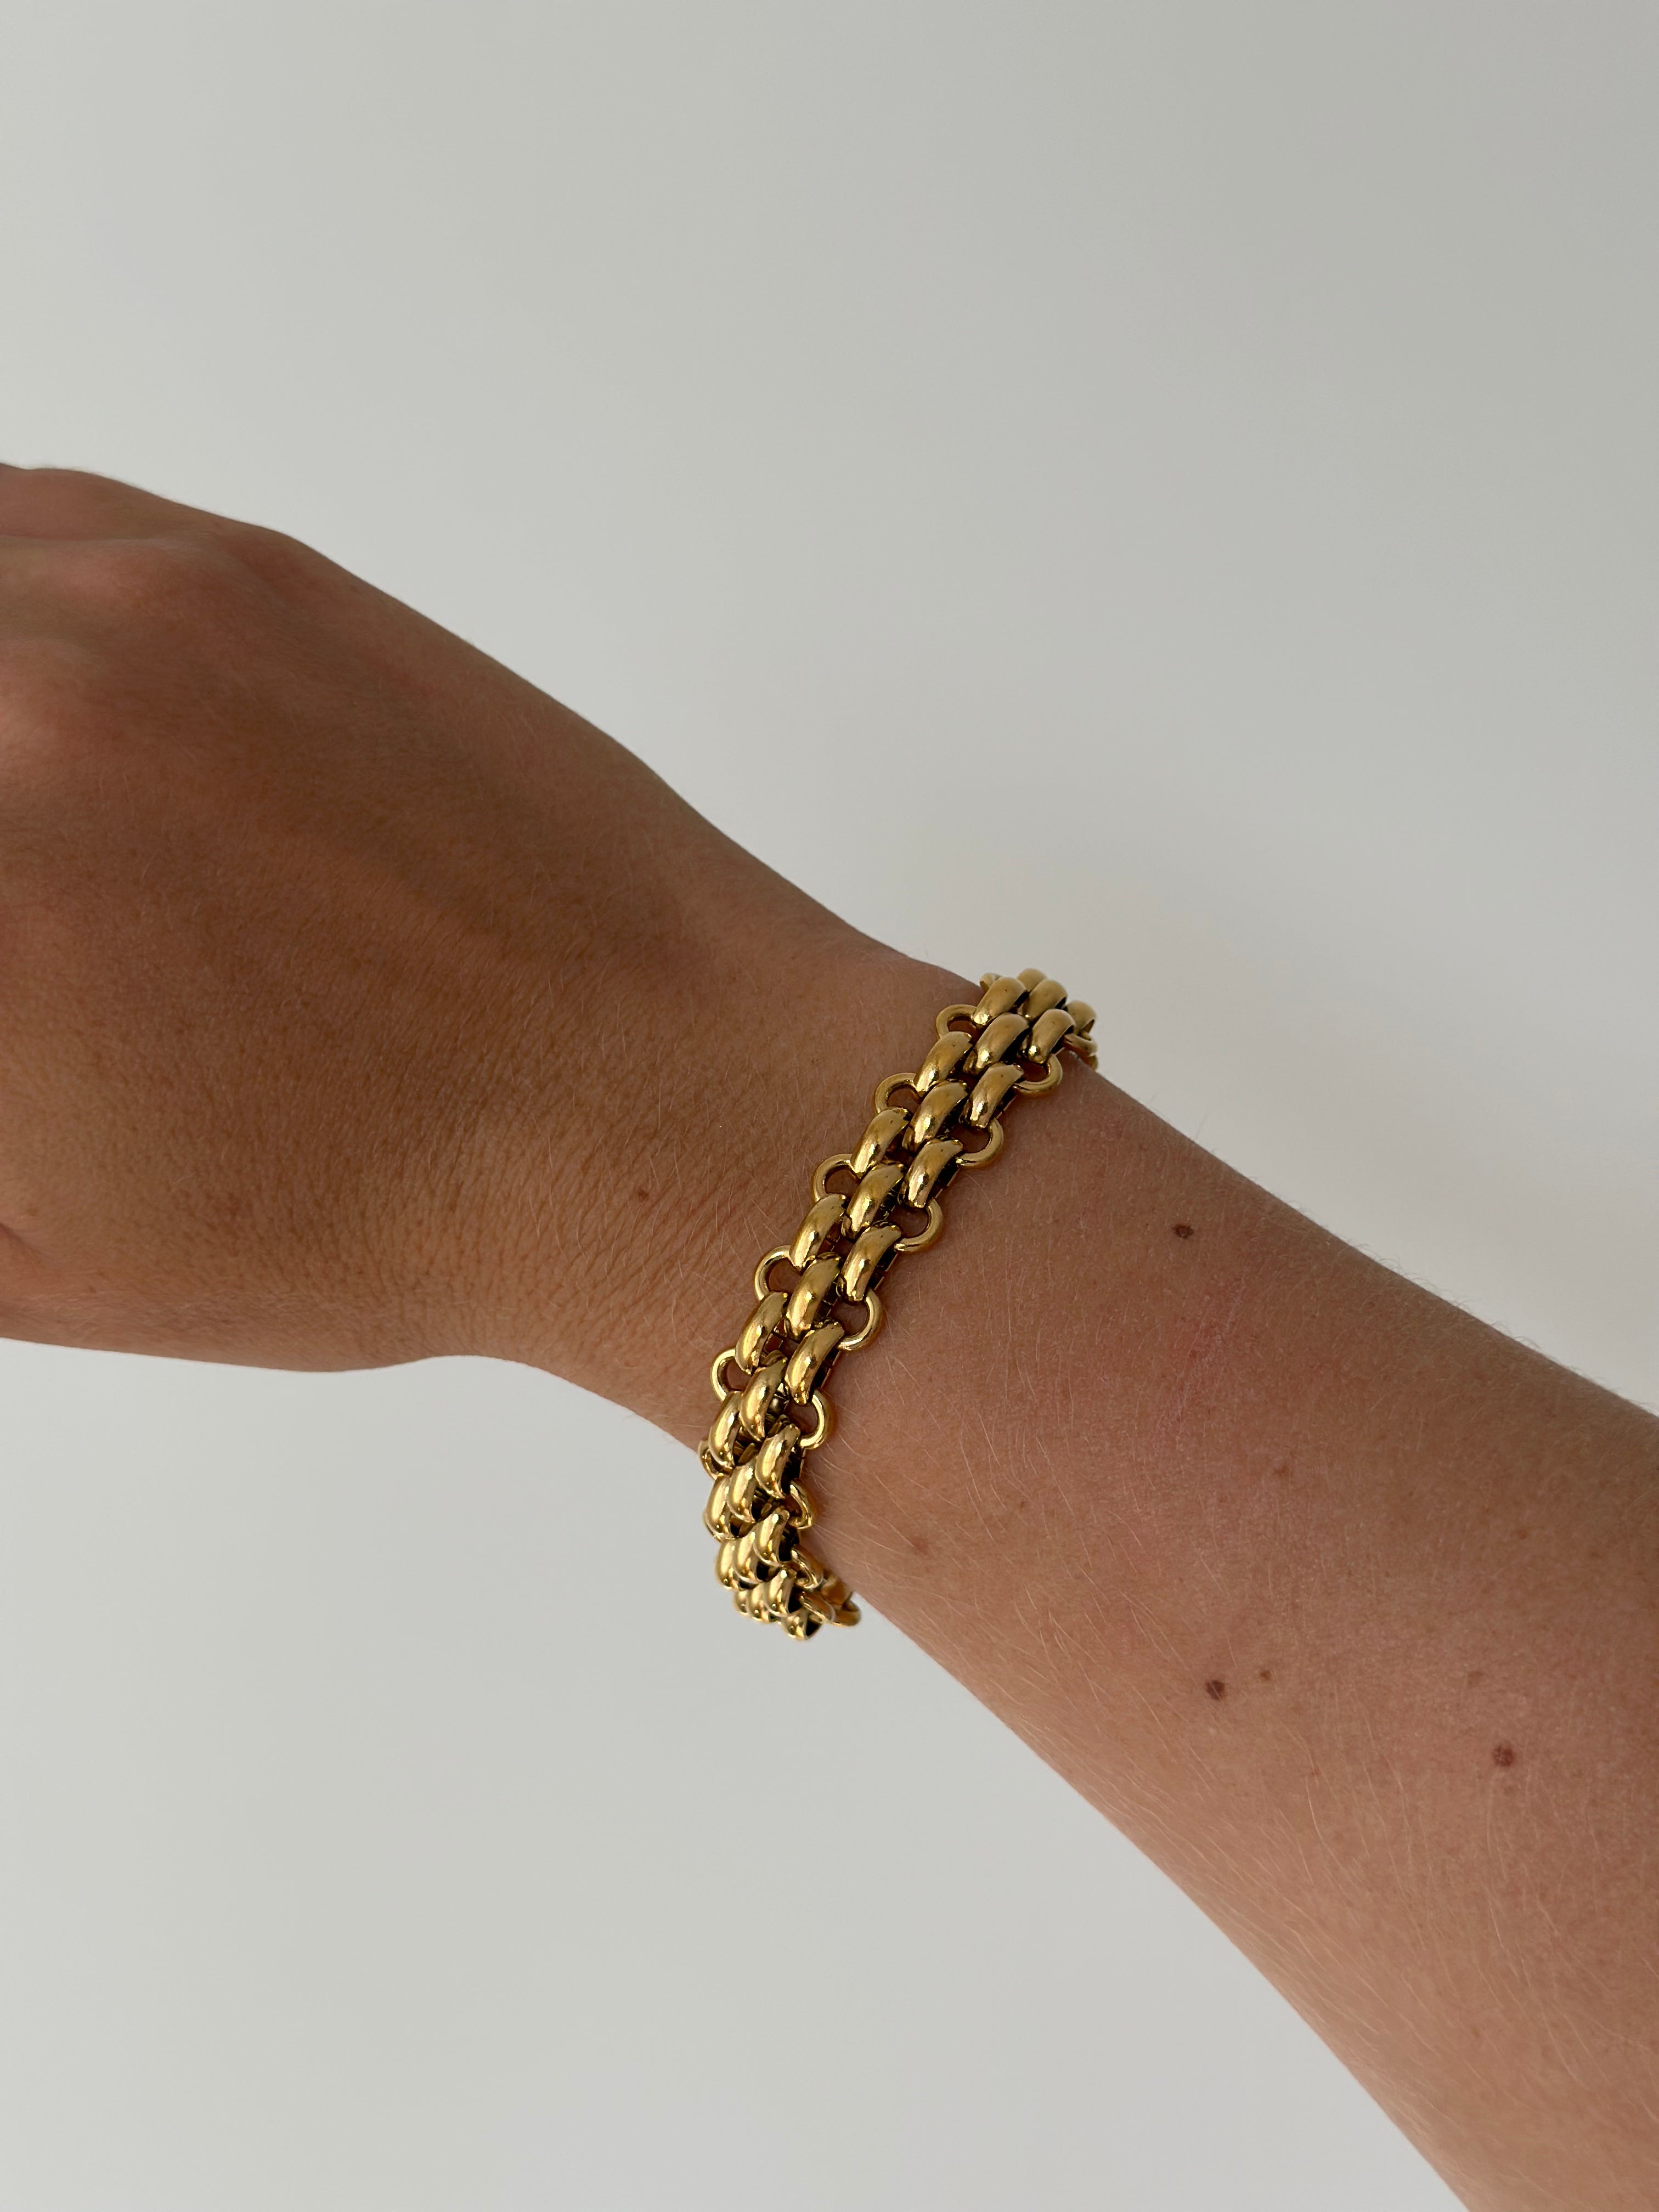 BETTY // Le bracelet